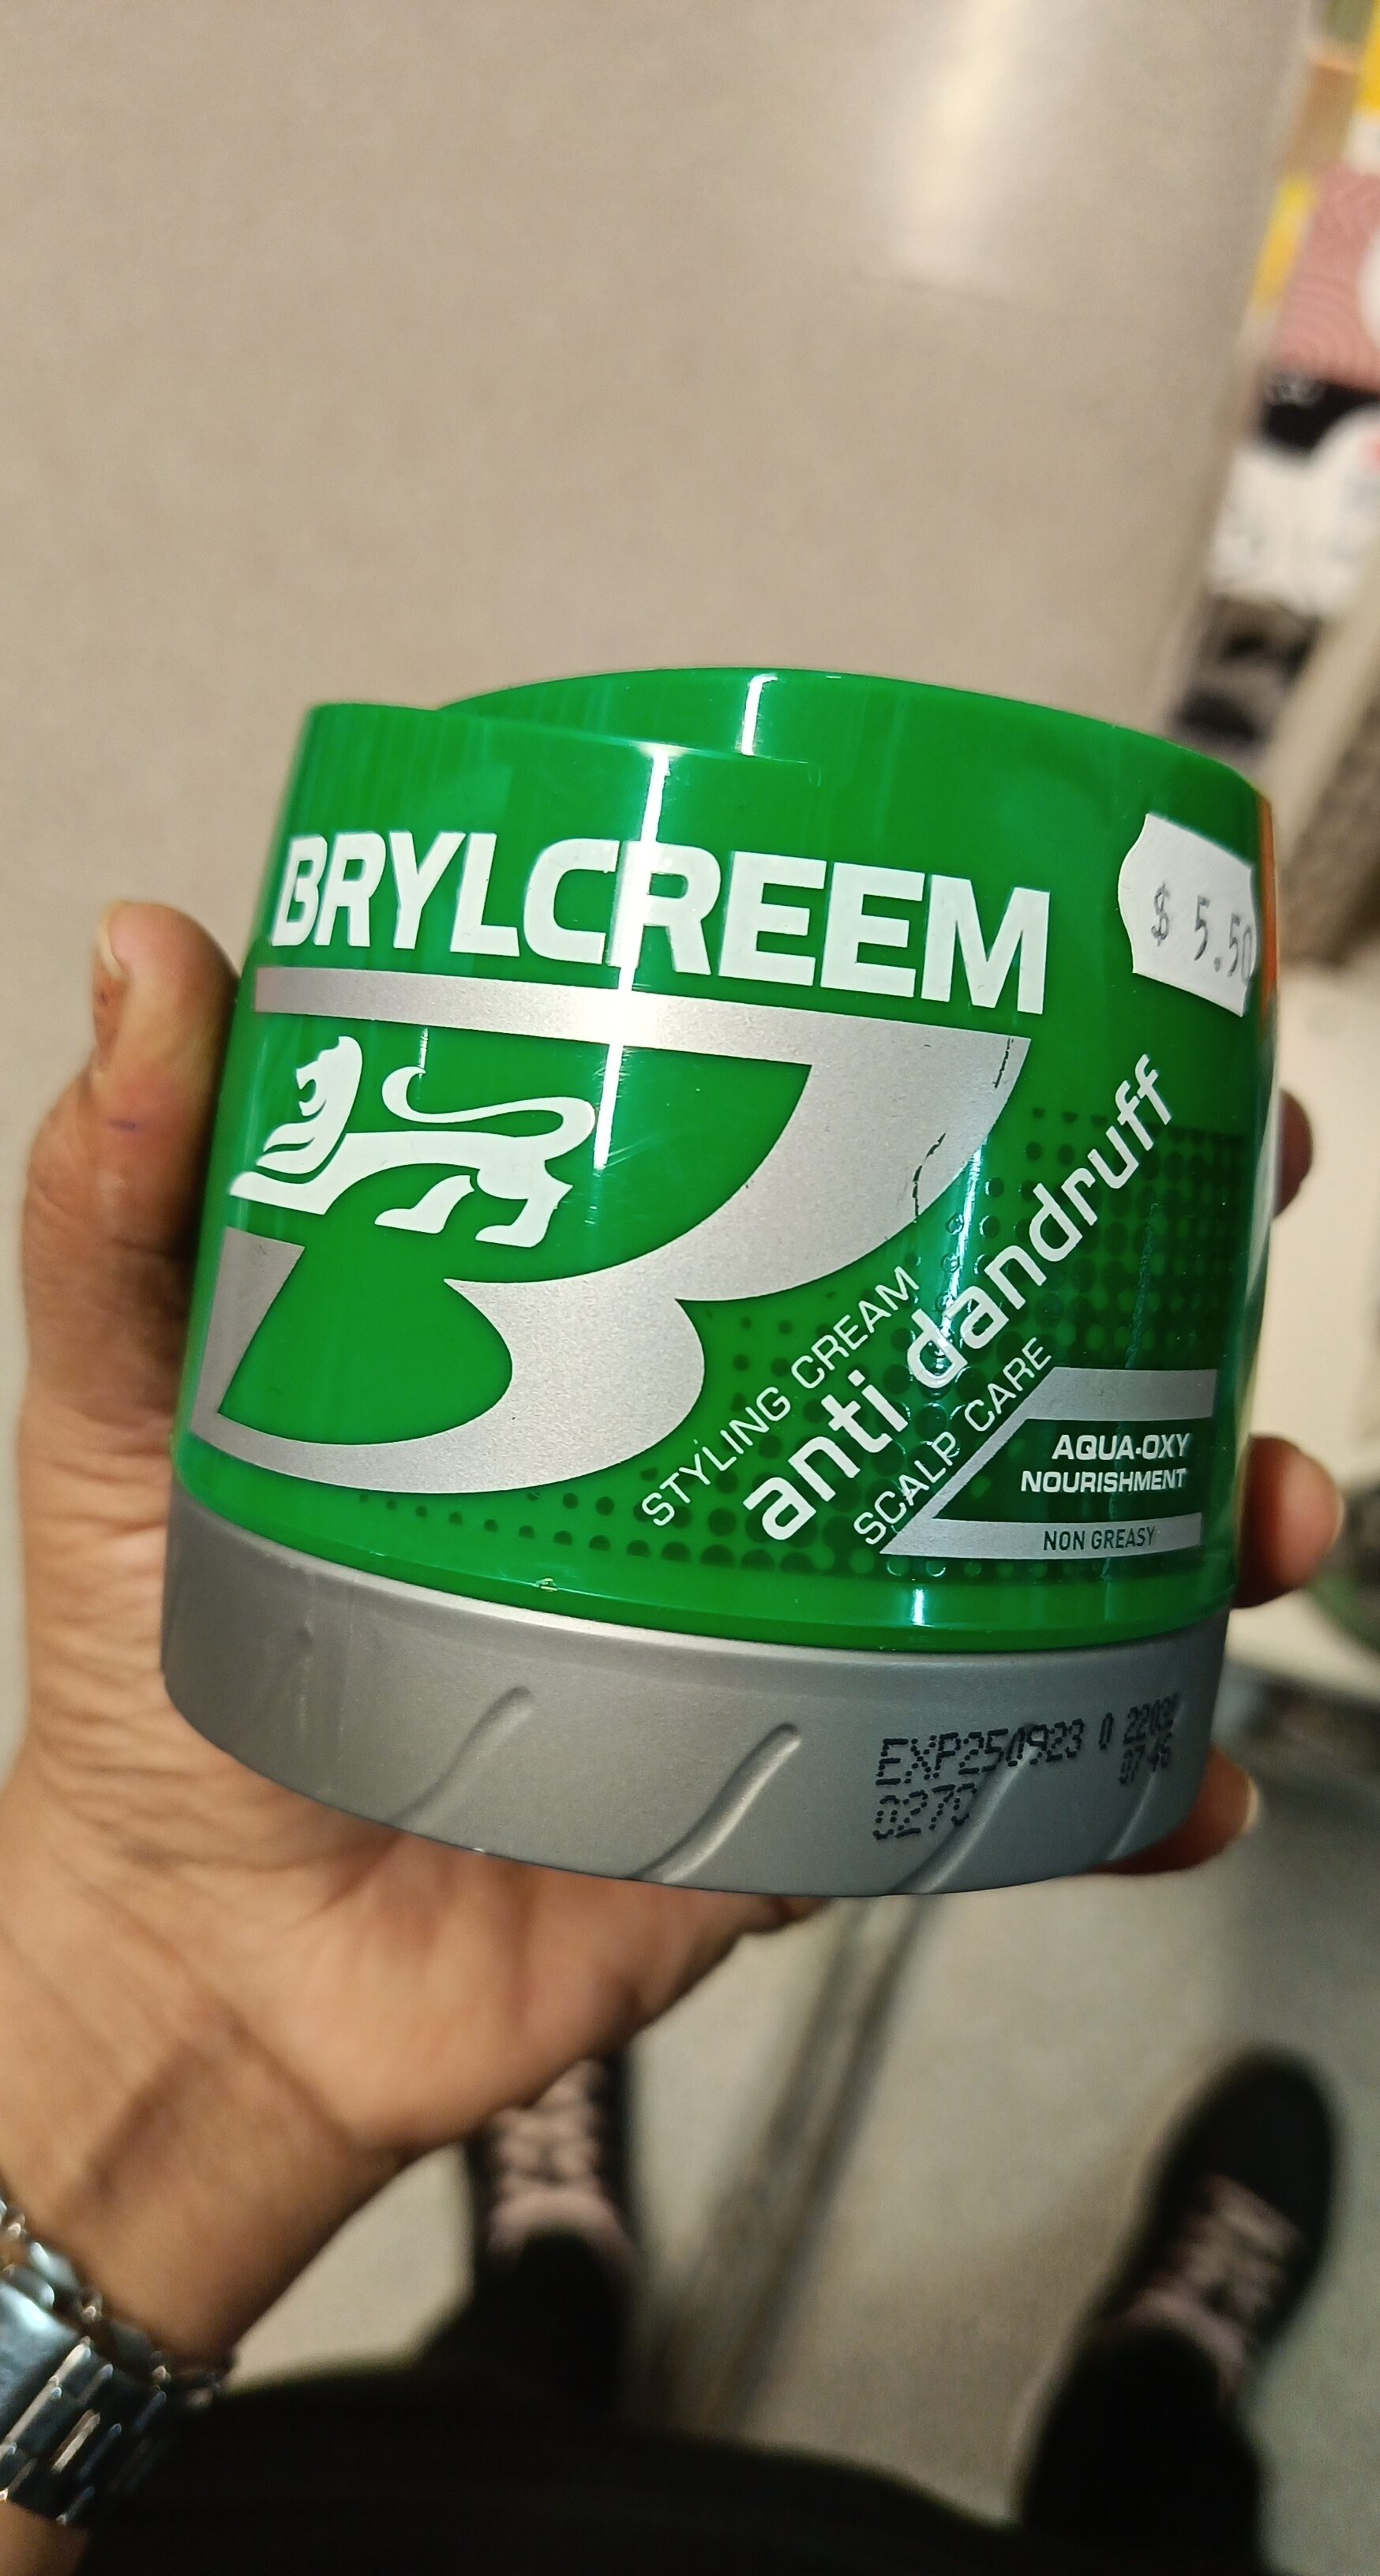 Brylcreem anti dandruff - Produkt - en